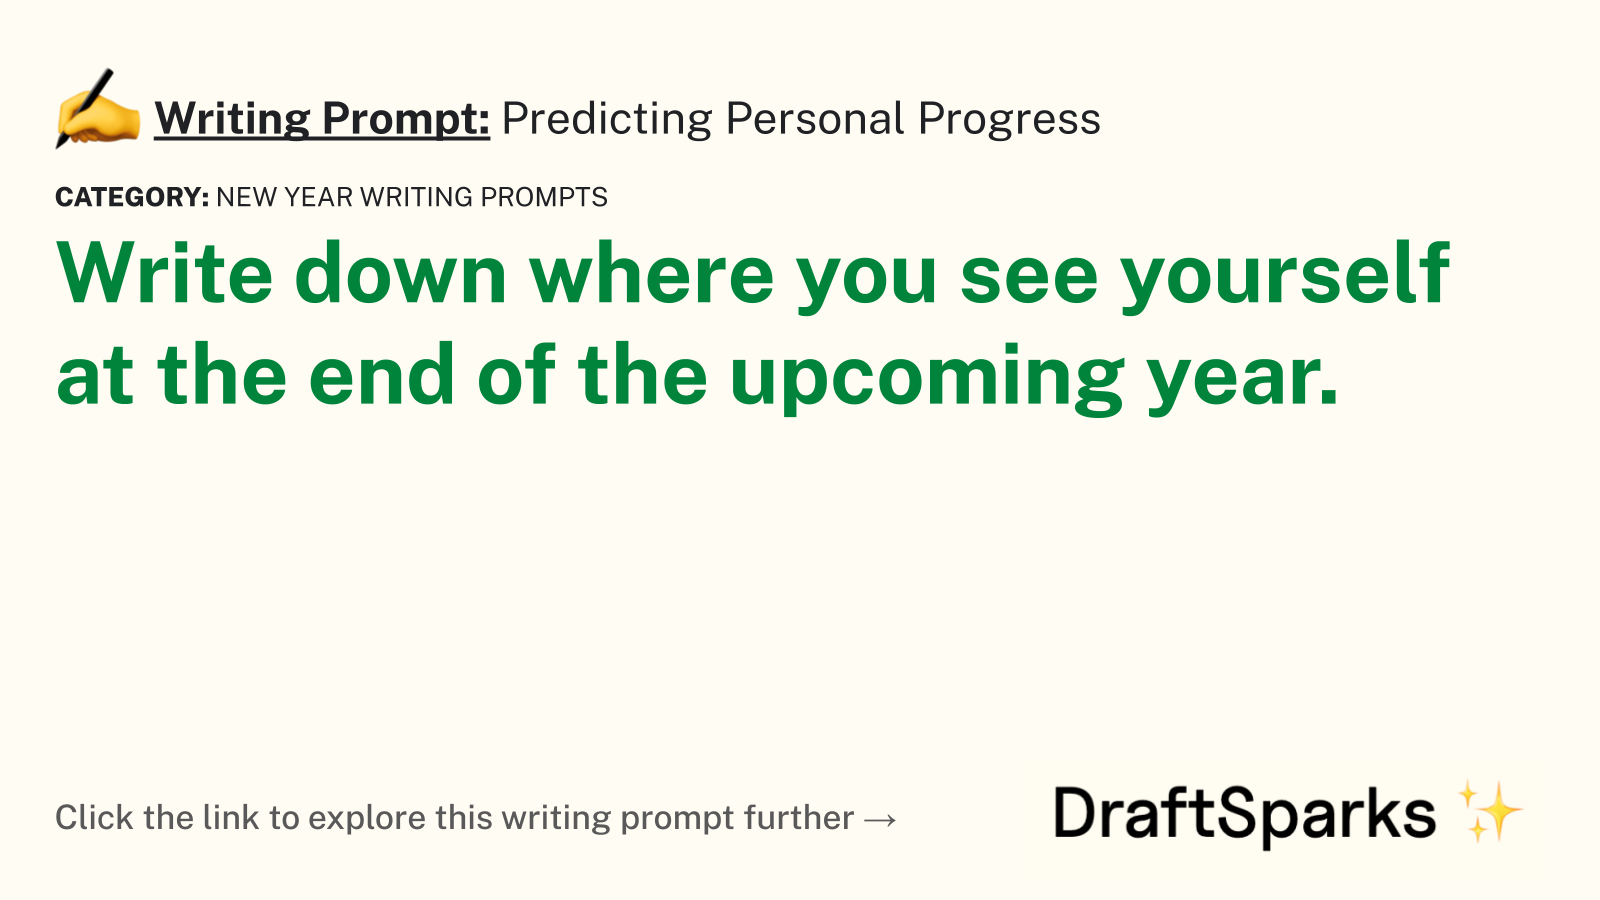 Predicting Personal Progress